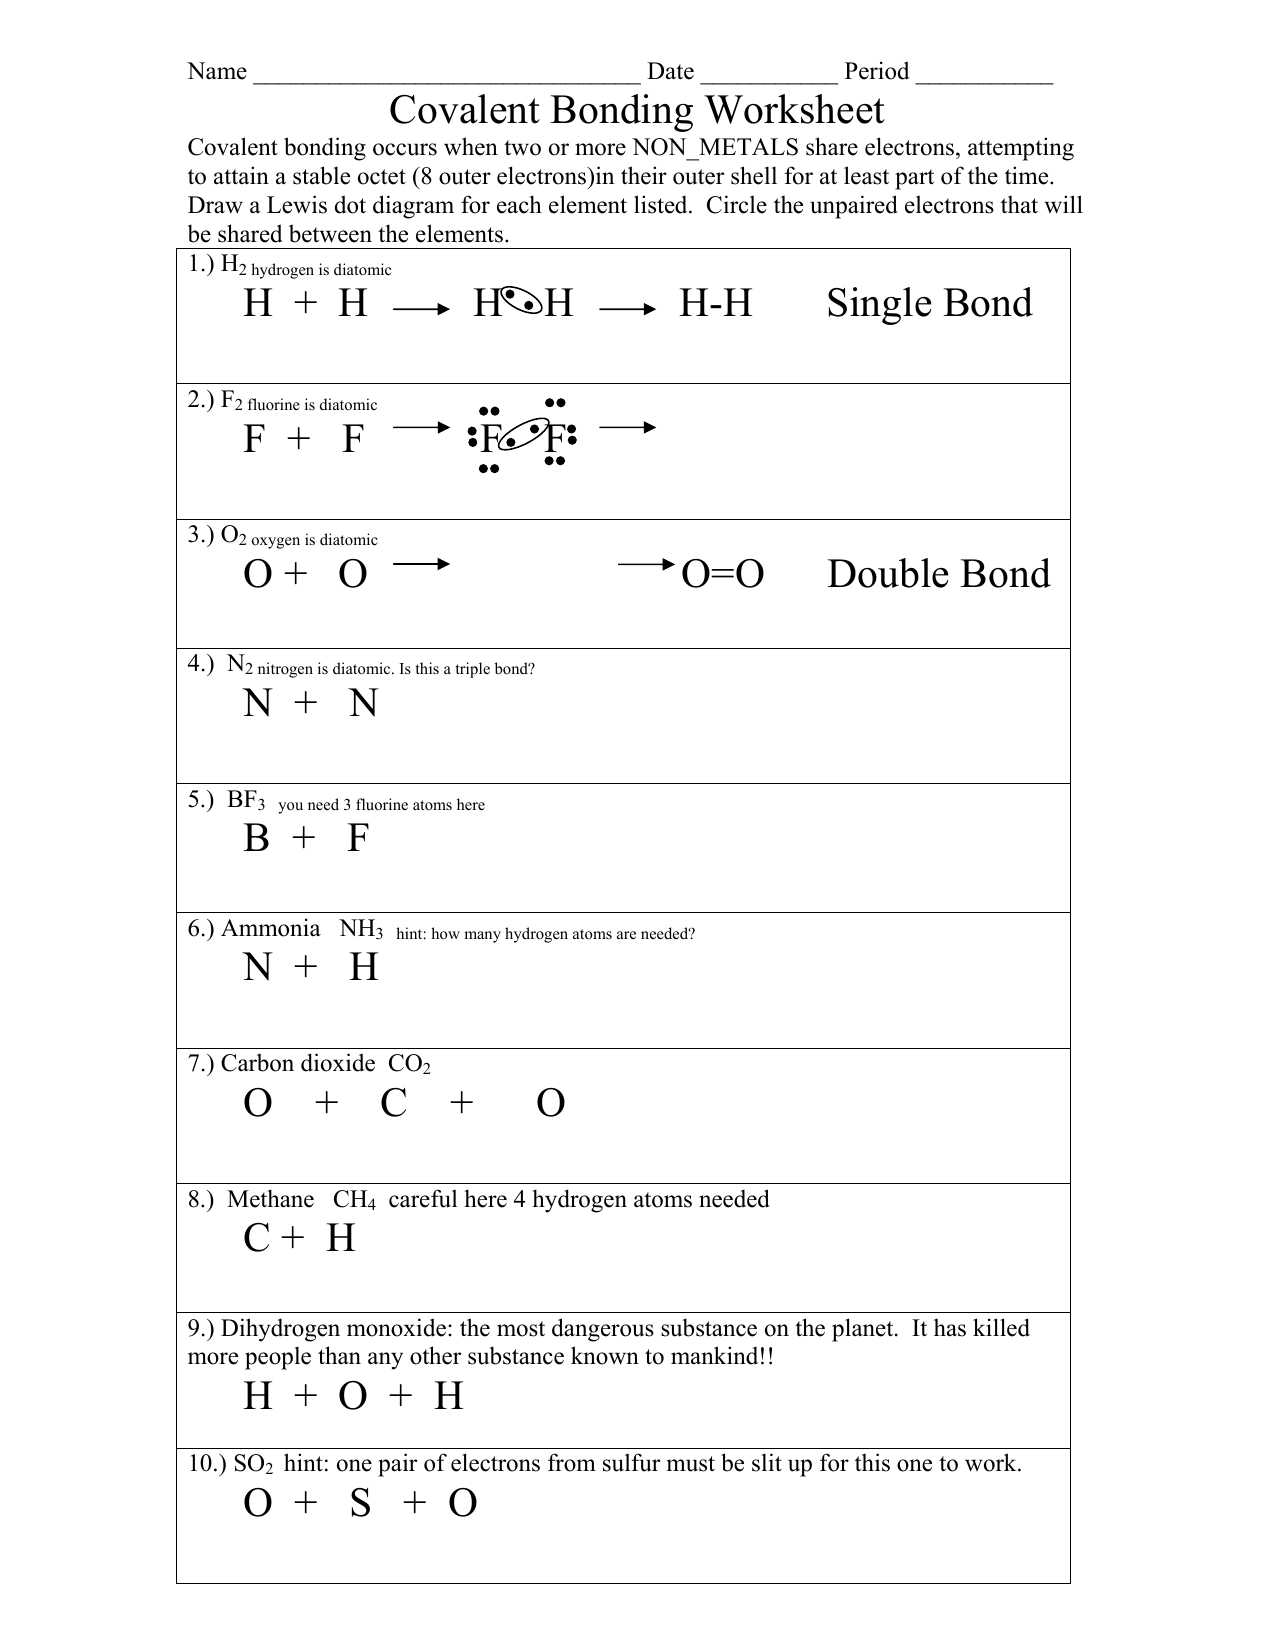 Covalent Bonding Worksheet Answers Pdf